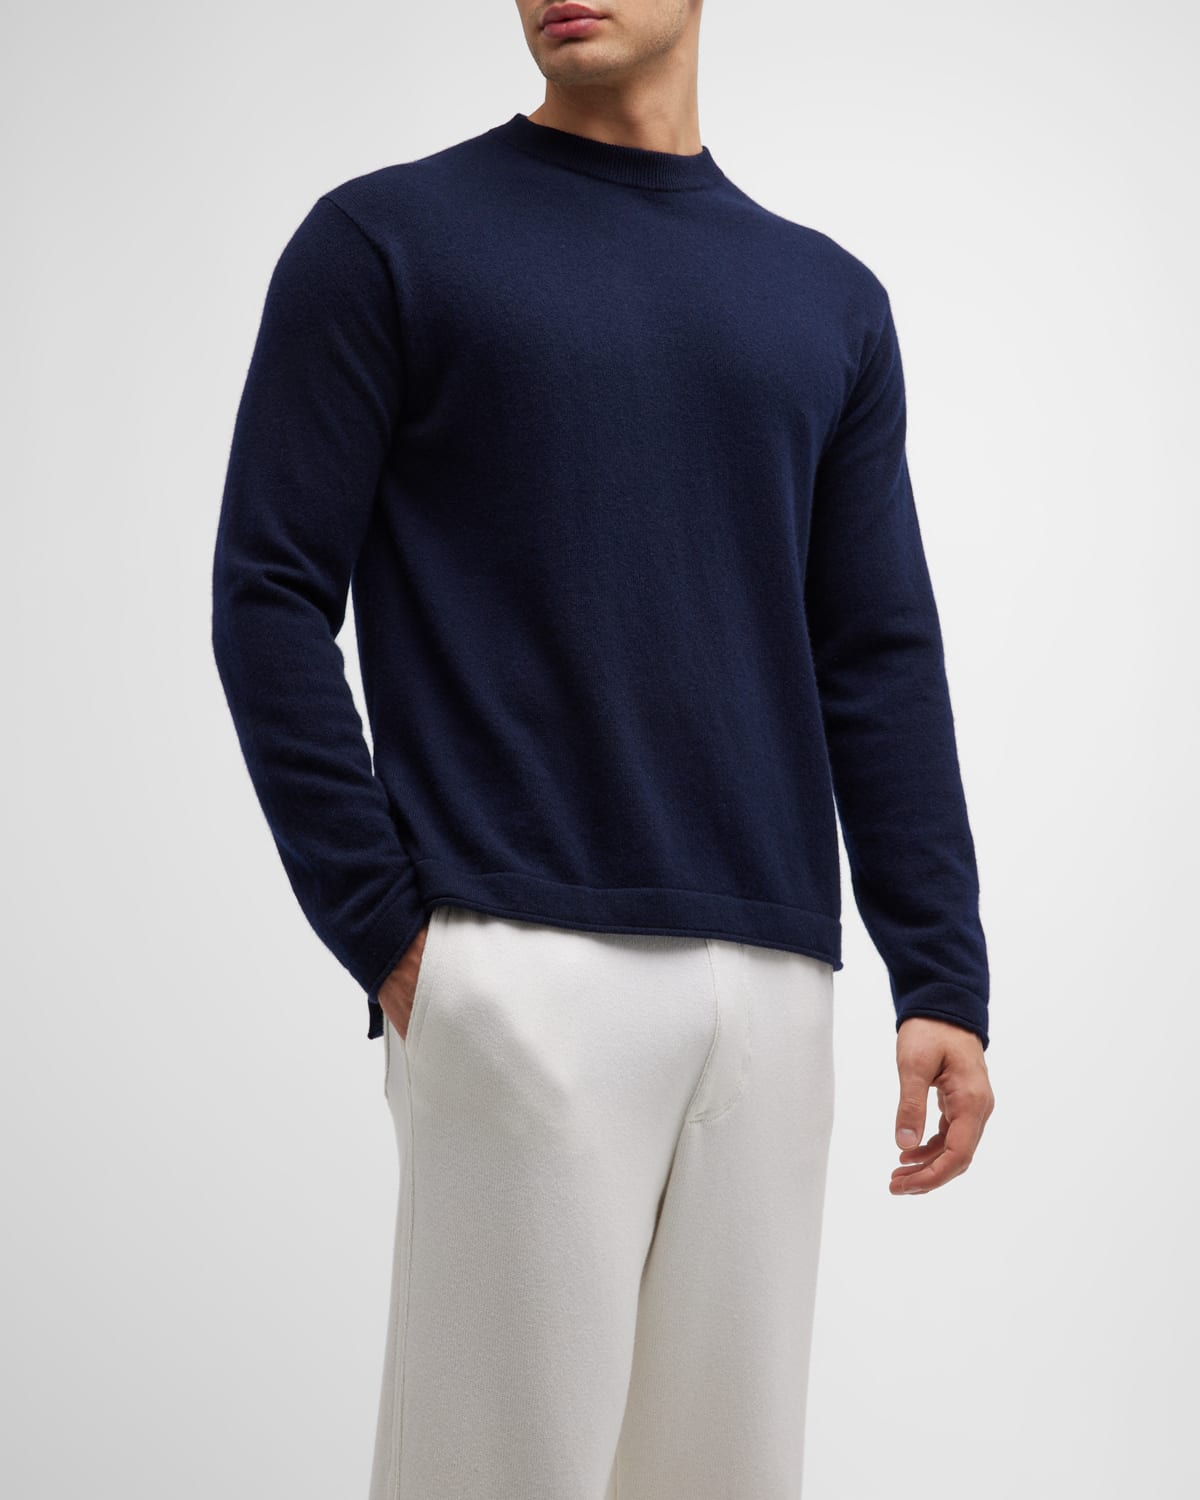 Men's Beneoit Cashmere Crewneck Sweater